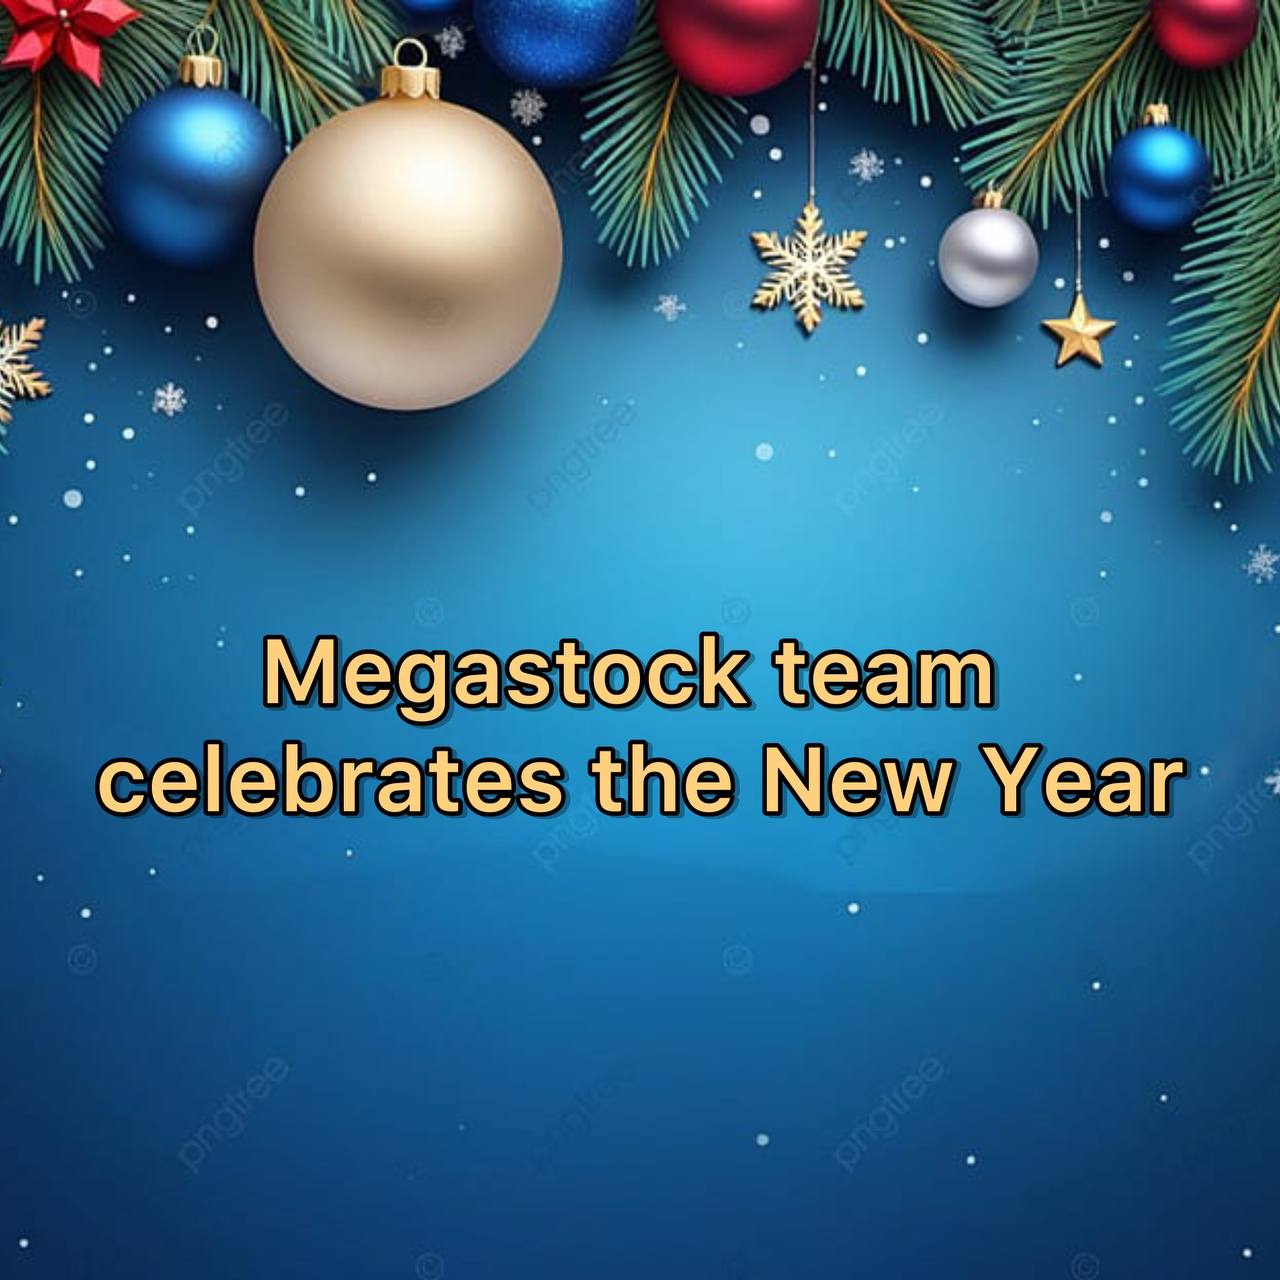 MegaStock selebrates the New Year